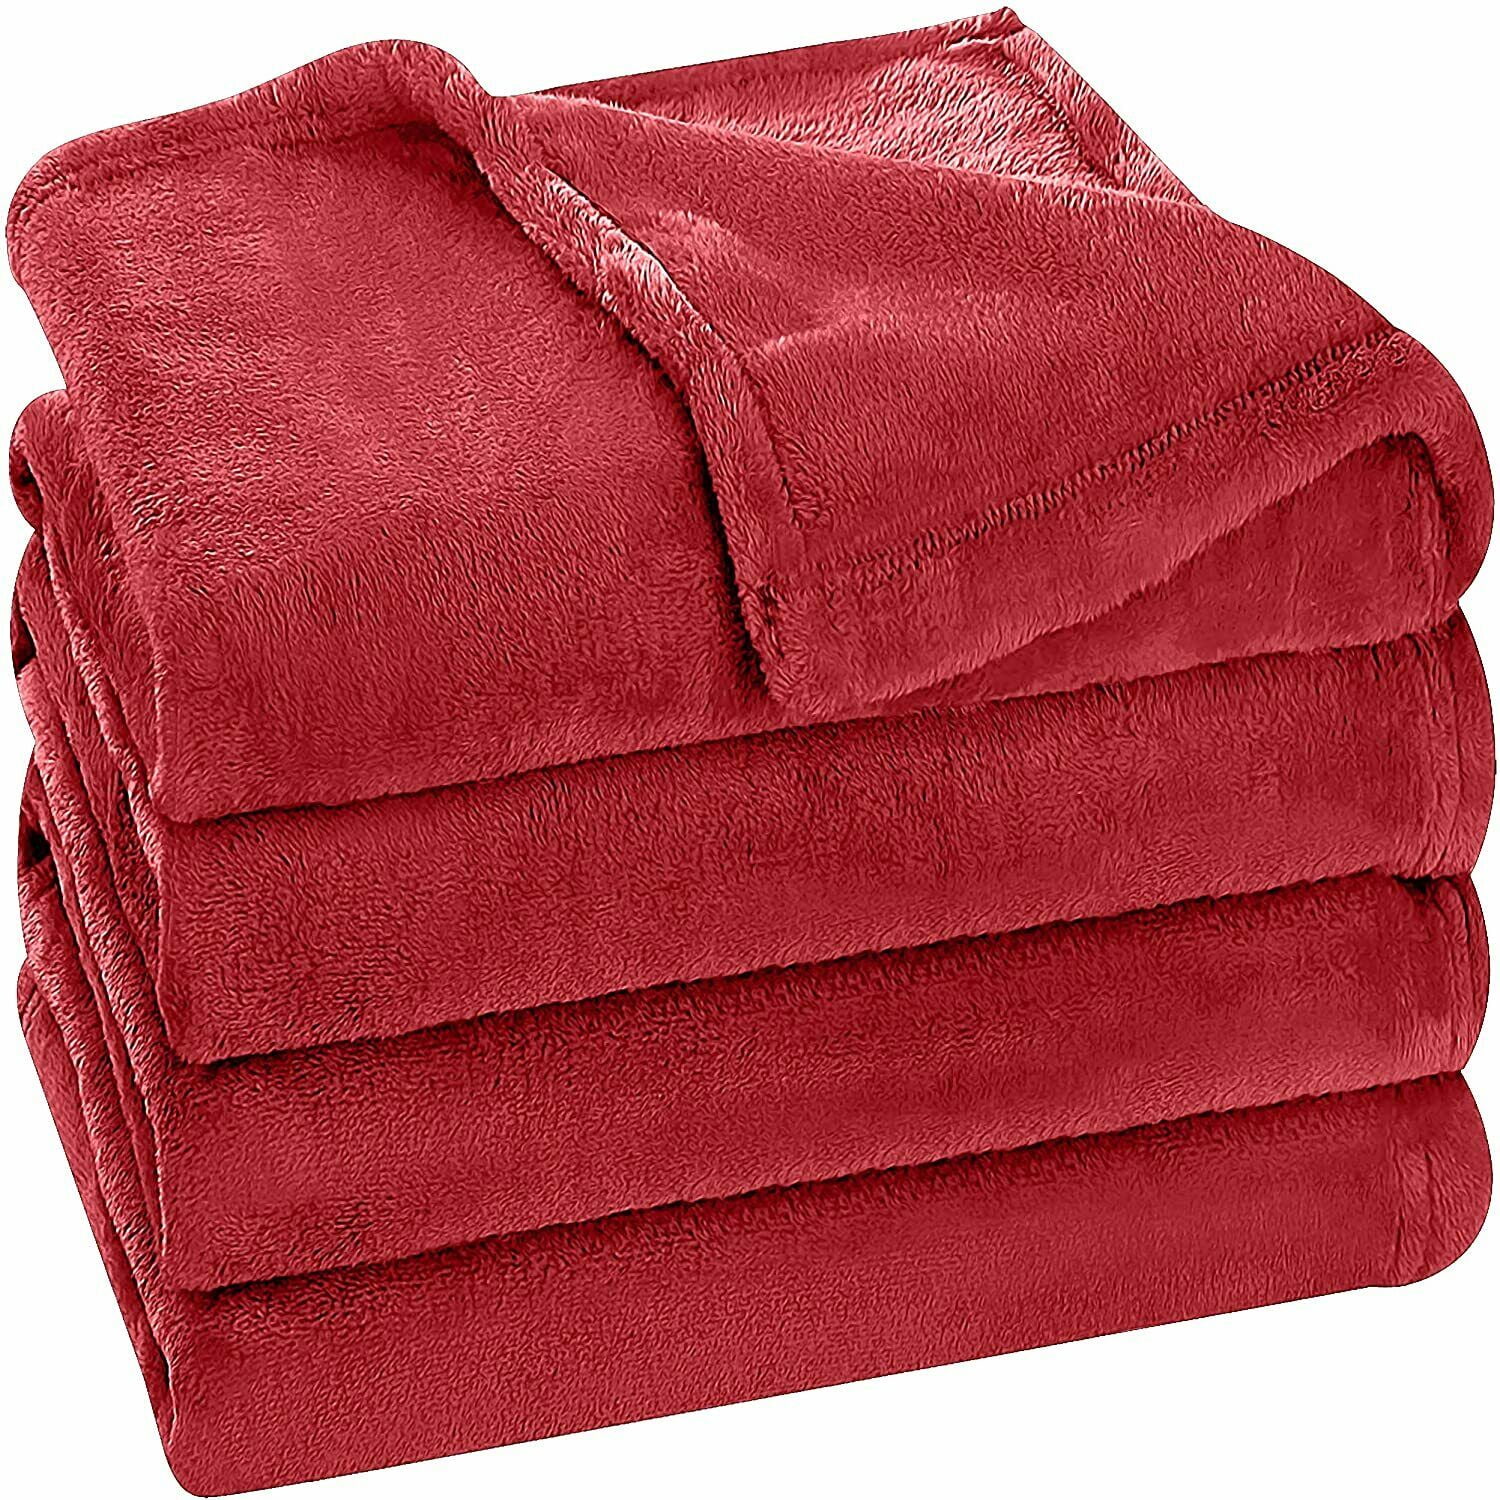 Super Soft Flannel Fleece Blanket Lightweight Bed Warm Blanket Utopia Bedding